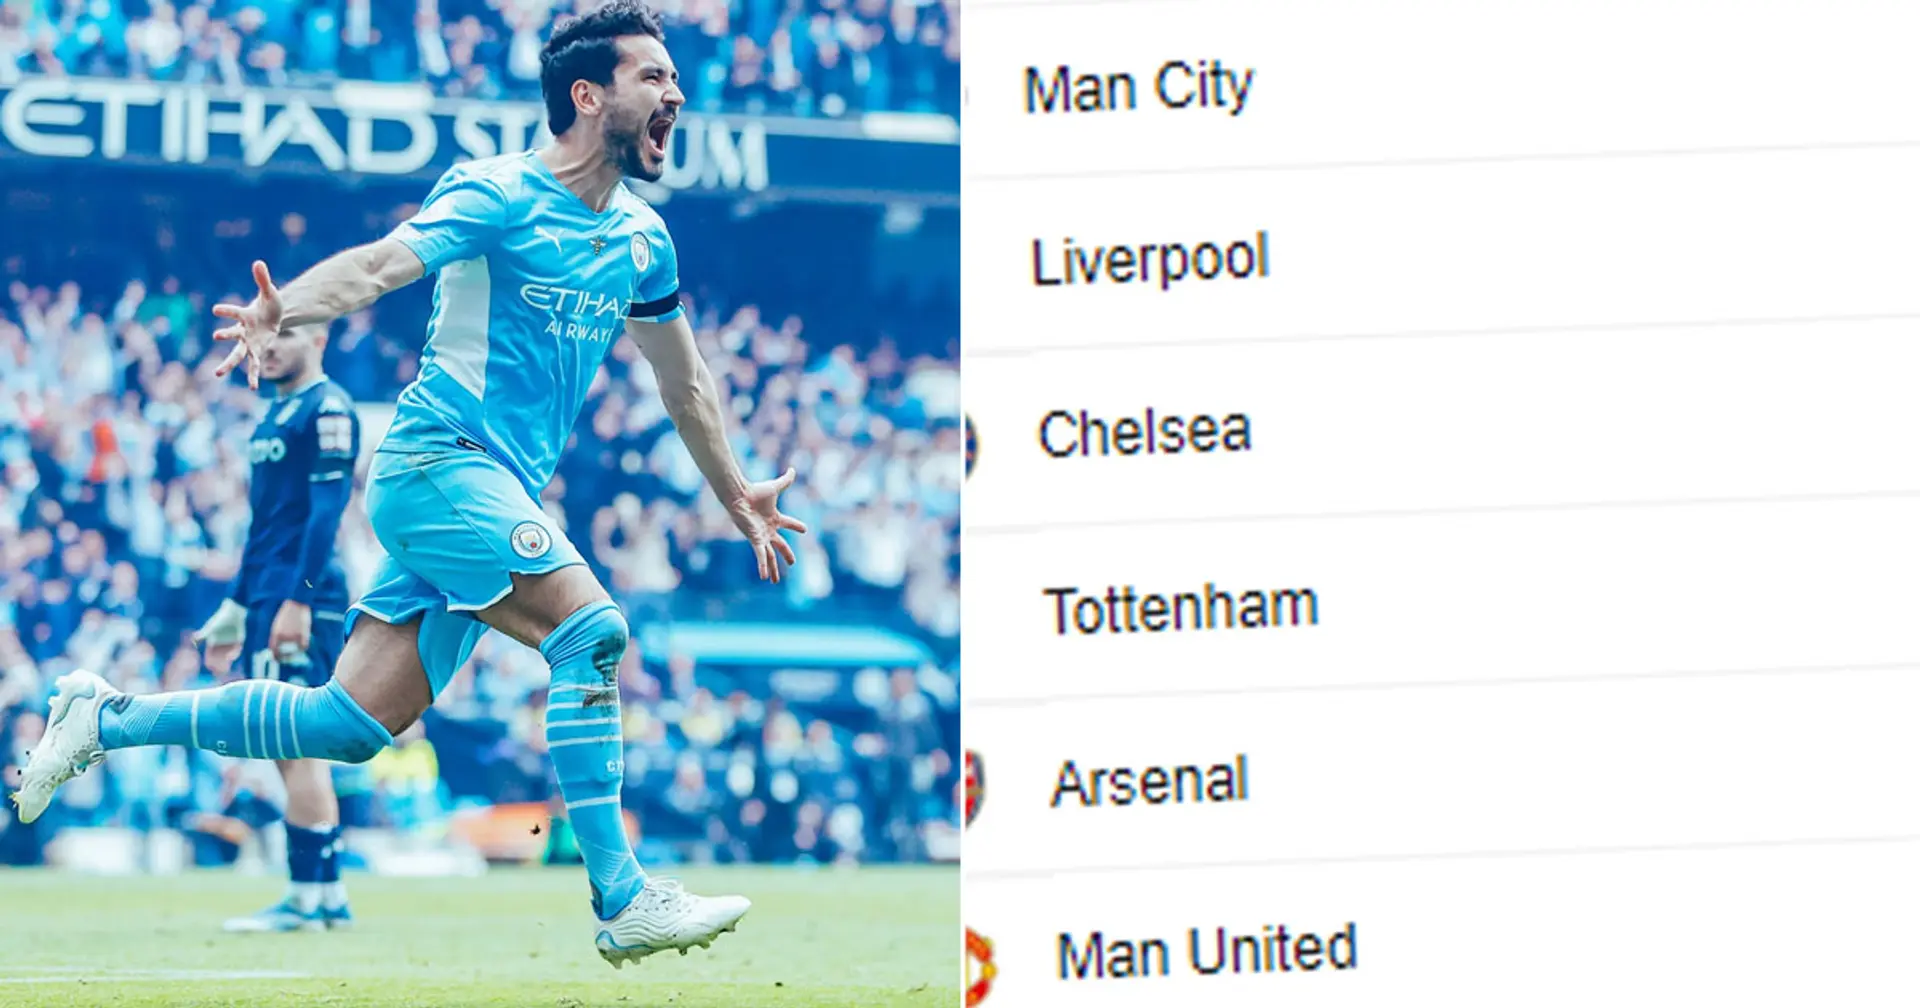 Man City win Premier League title, Liverpool finish 2nd: final league standings